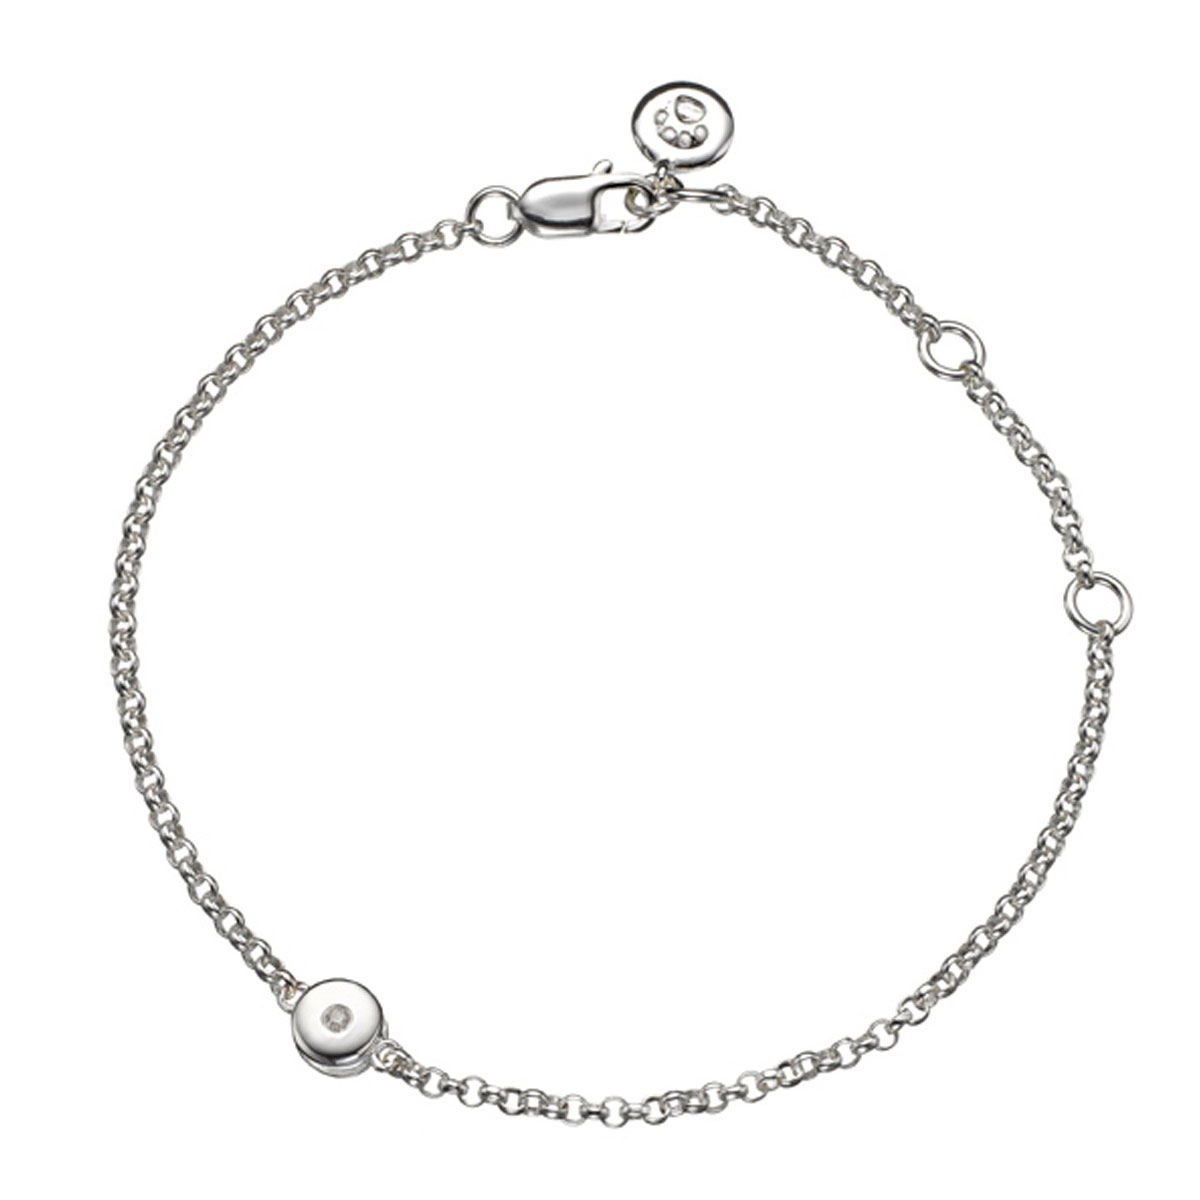 April Birthstone Bracelet - Diamond